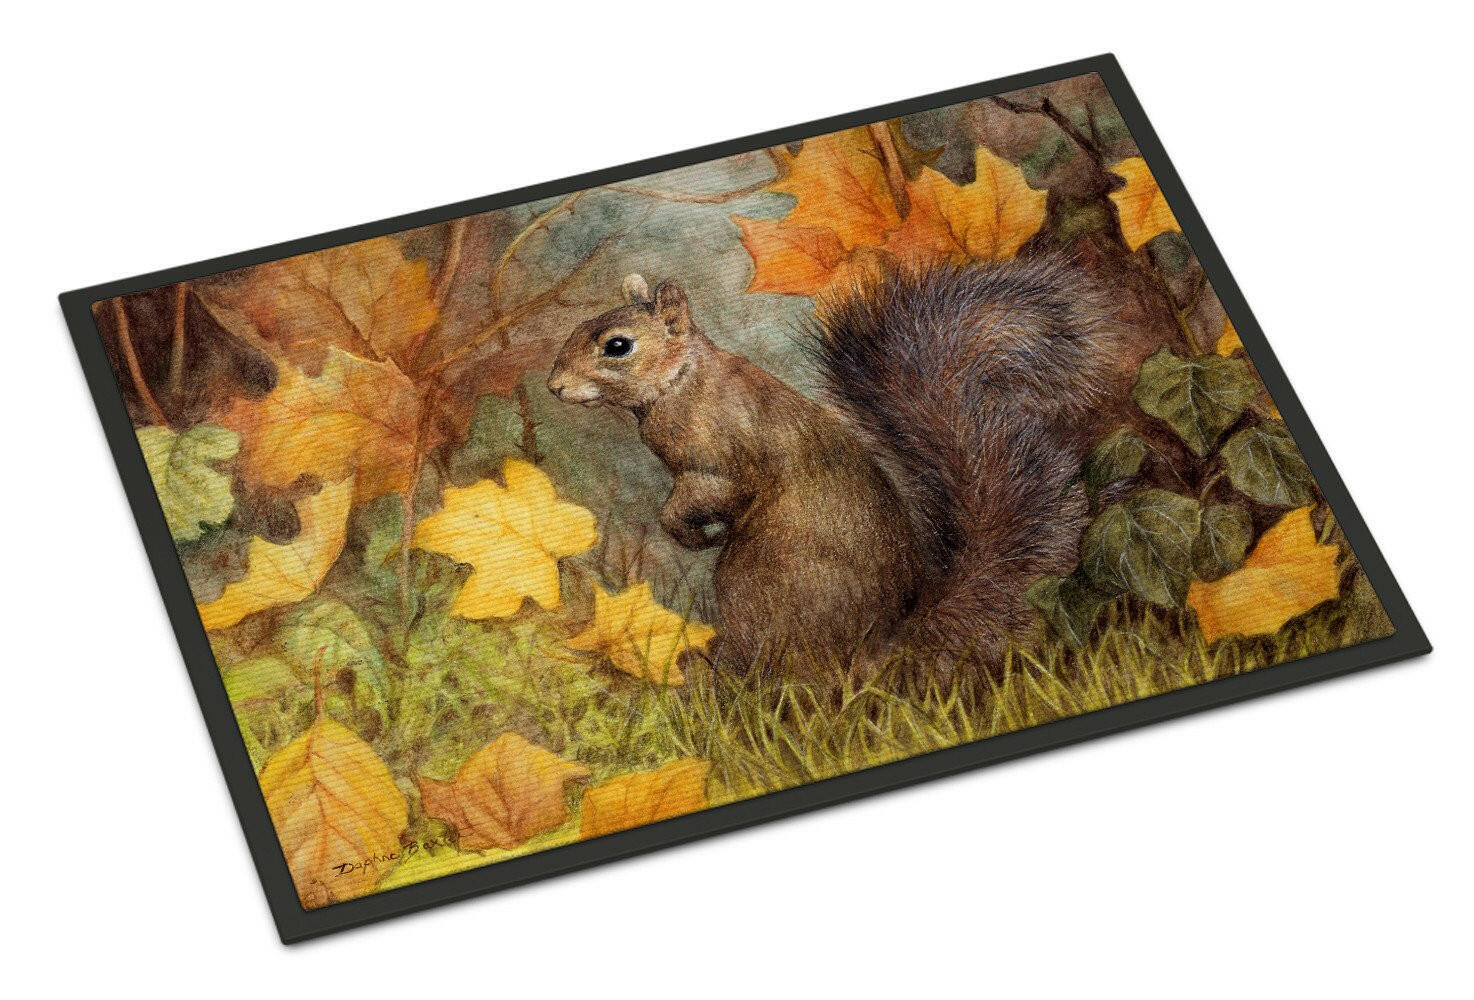 Grey Squirrel in Fall Leaves Indoor or Outdoor Mat 24x36 BDBA0097JMAT - the-store.com